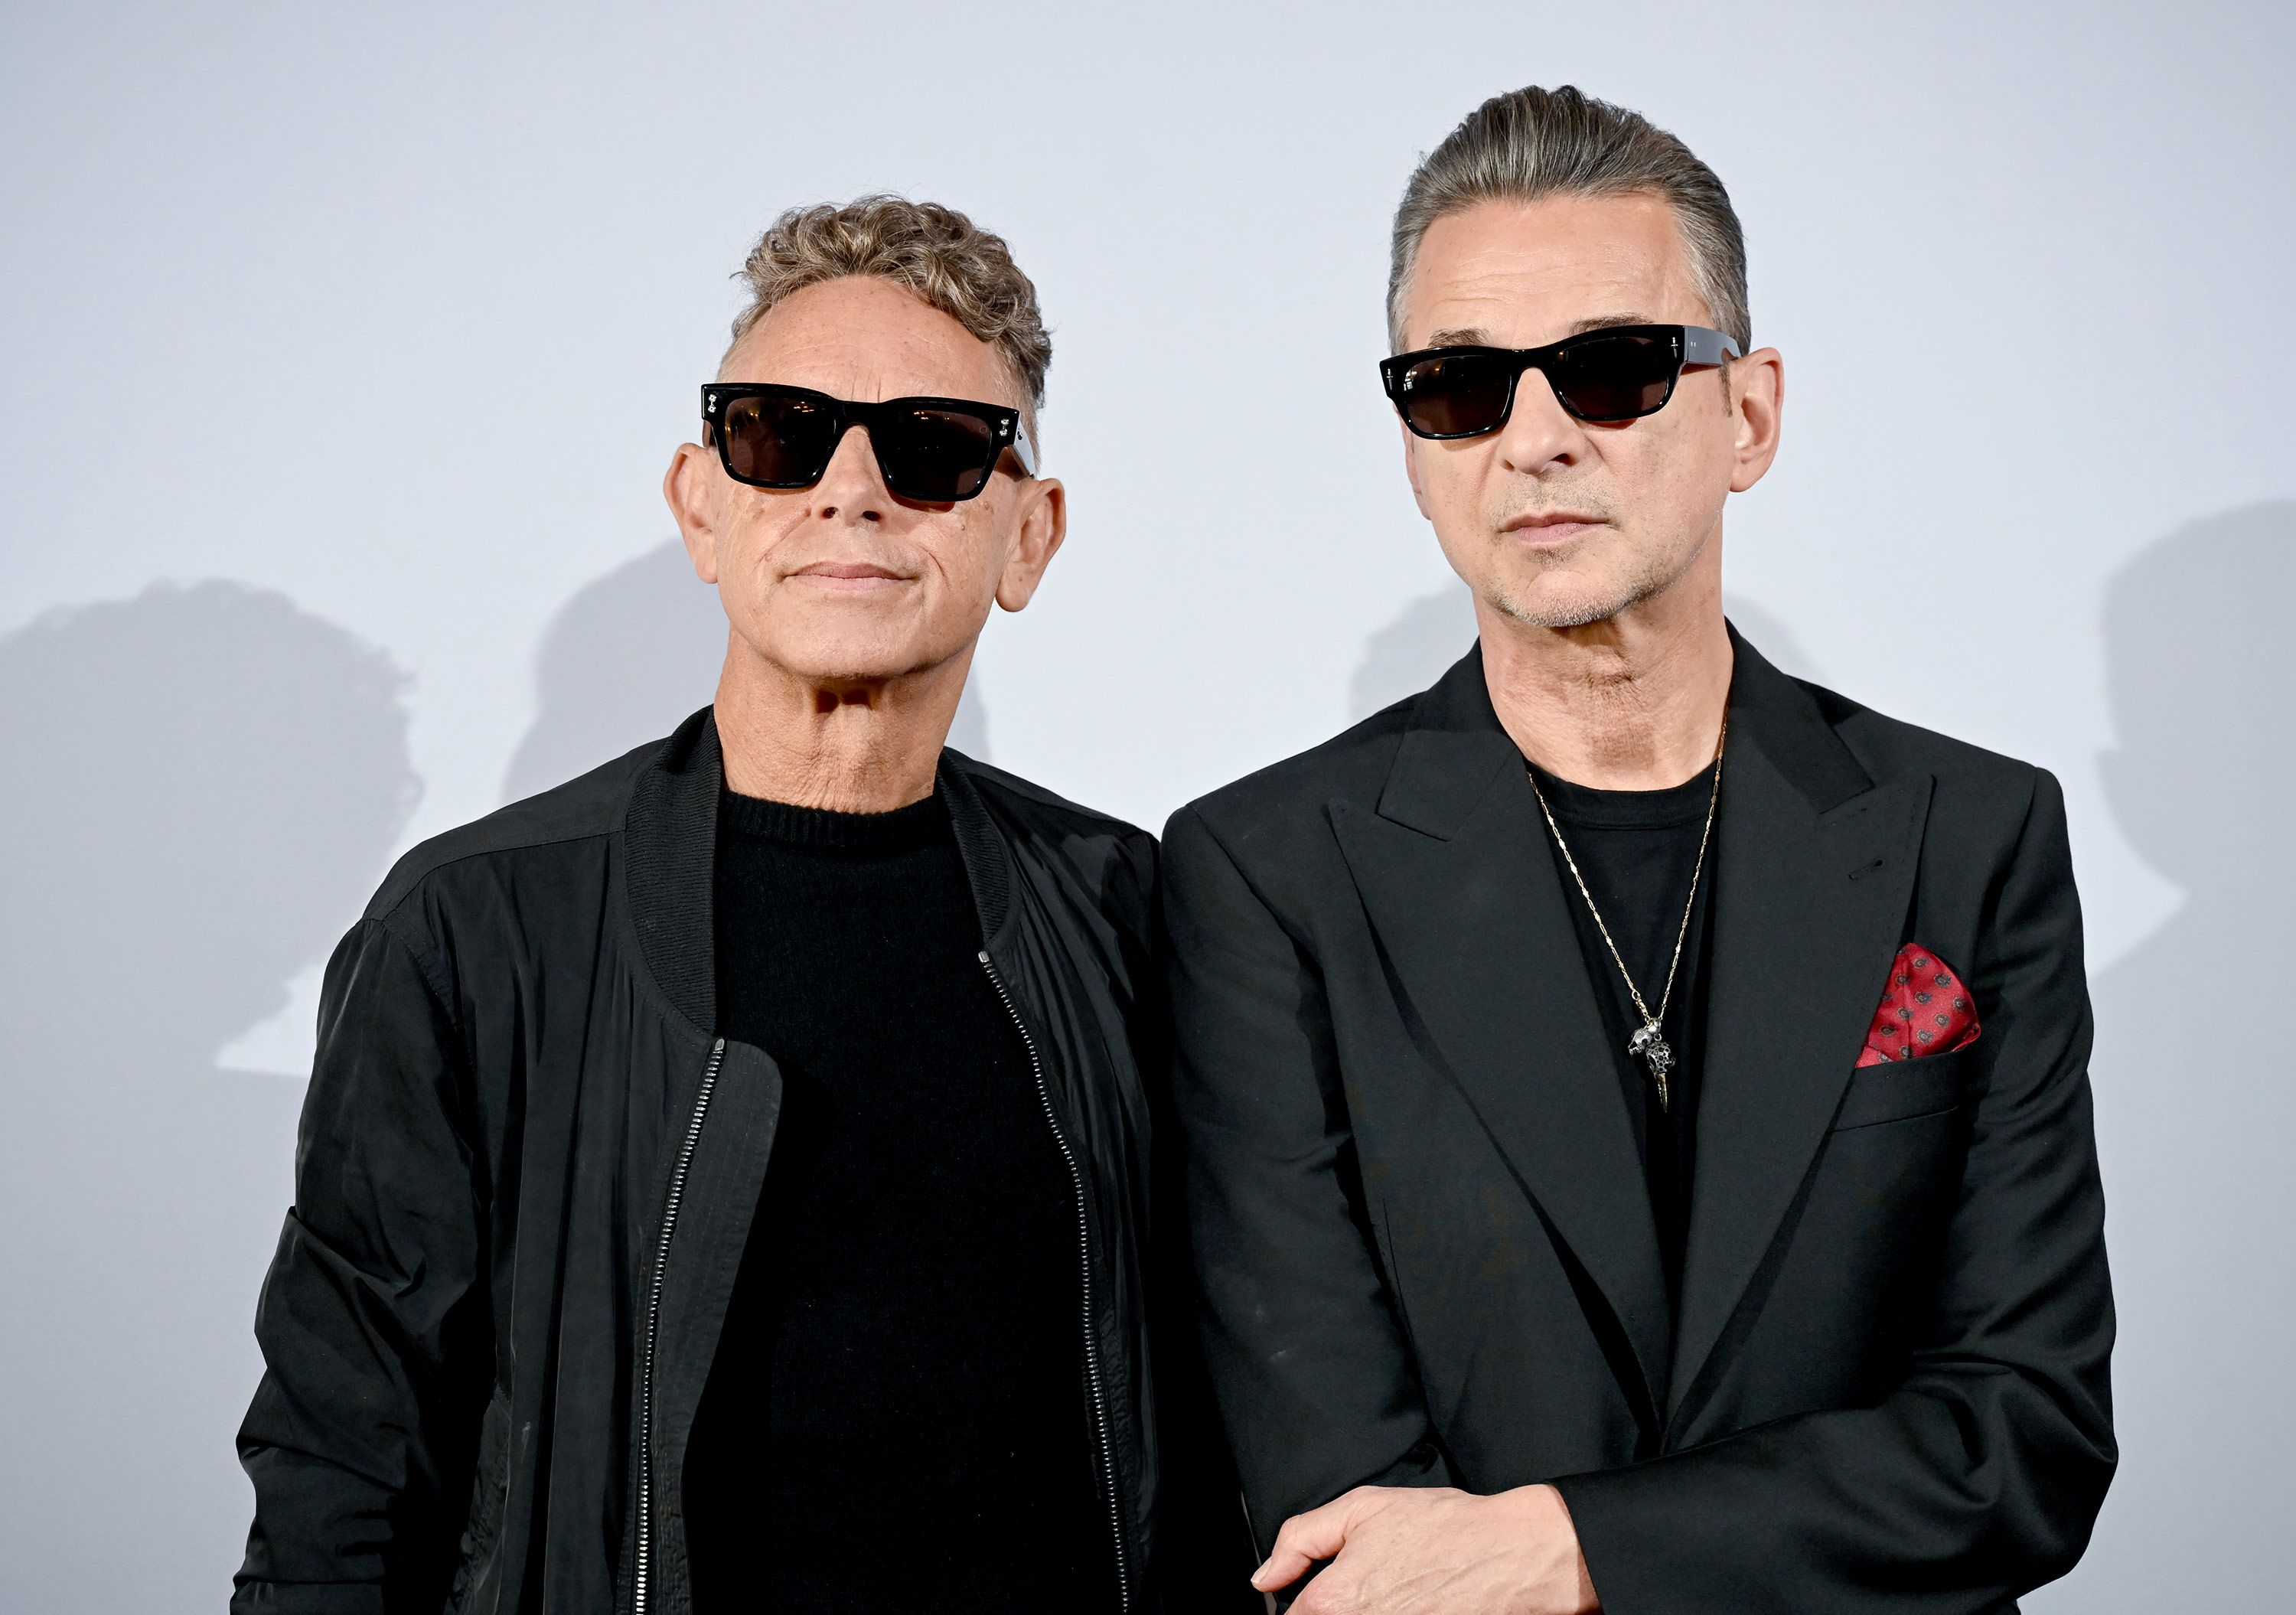 Depeche Mode History